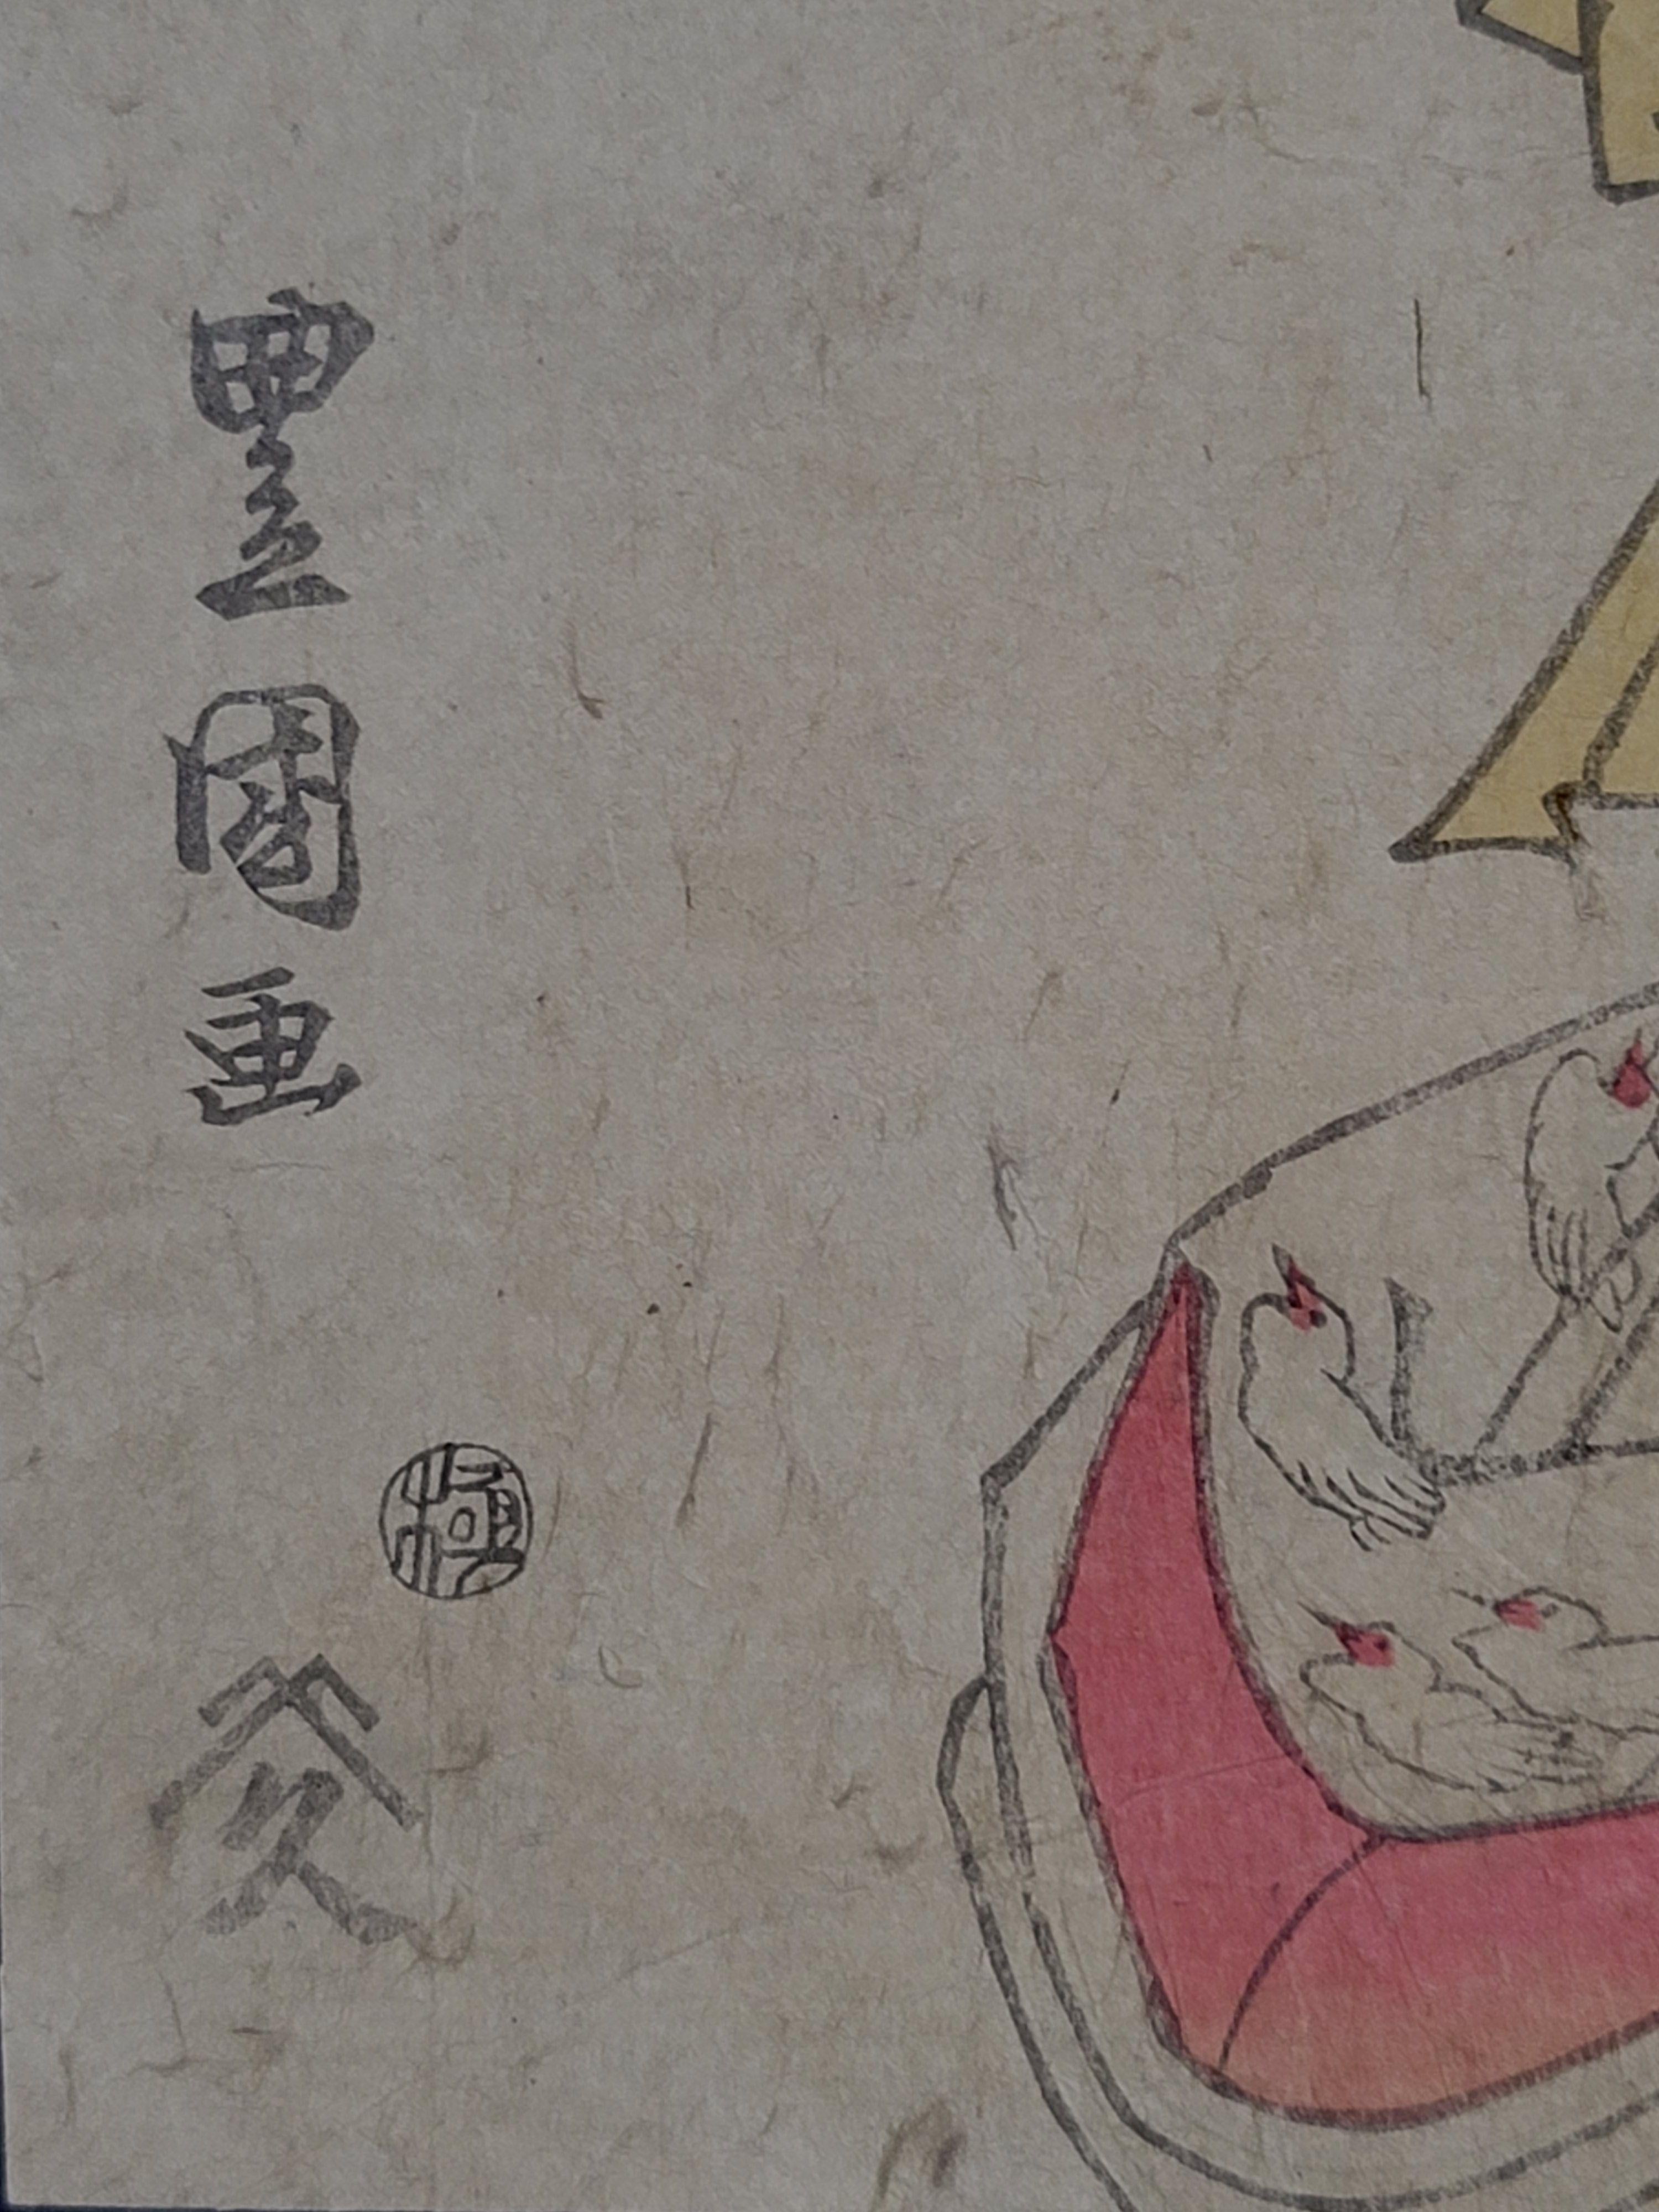 19th Century Japanese Woodblock Print by Utagawa Toyokuni I For Sale